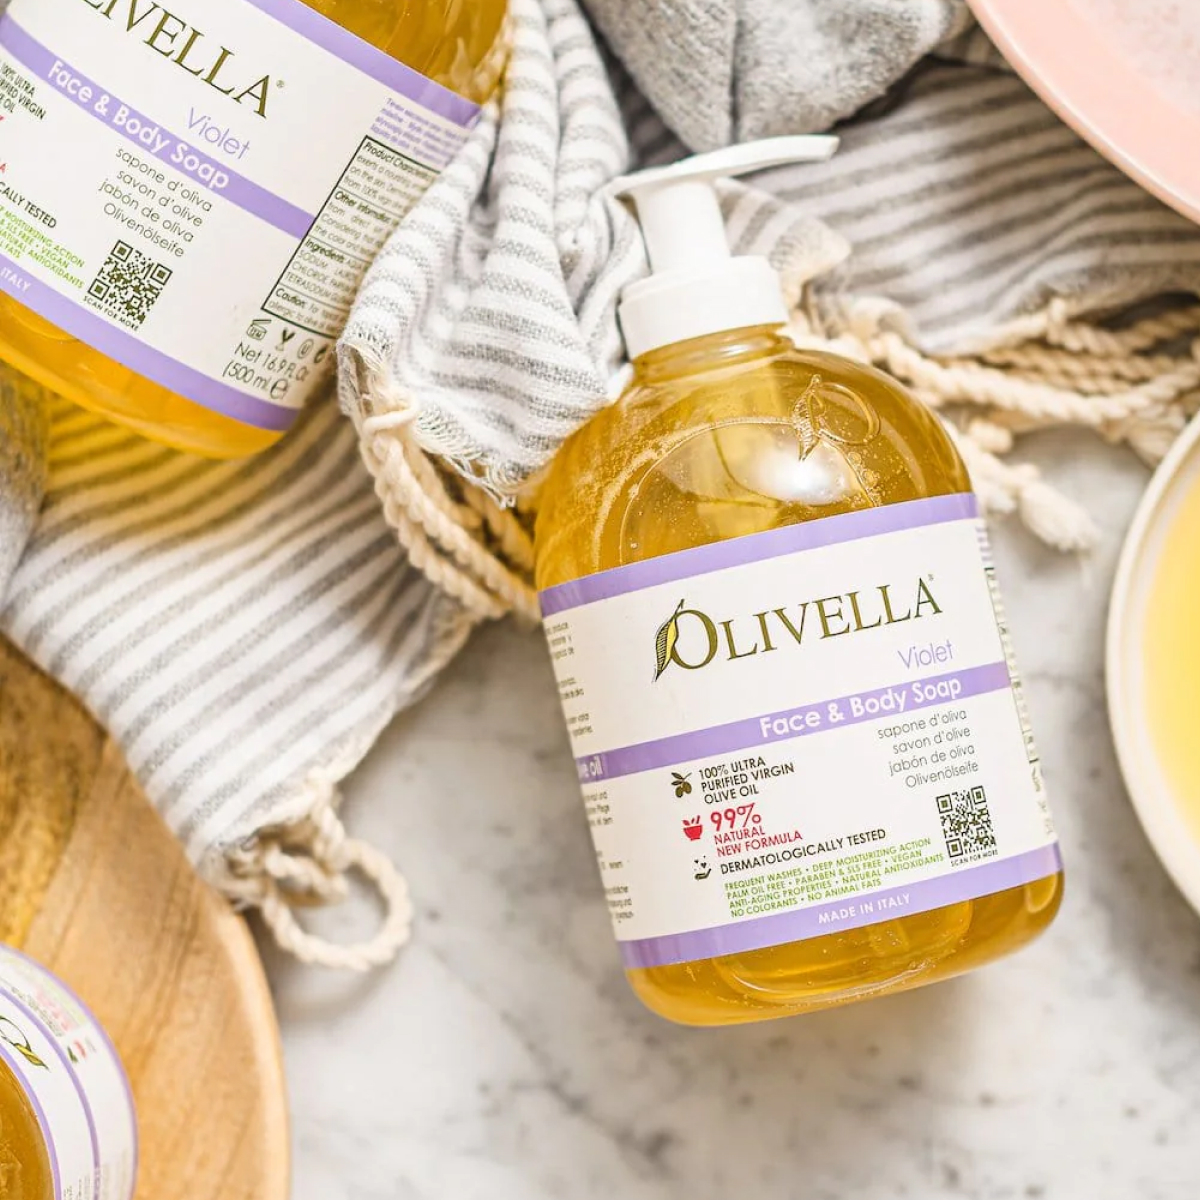 Жидкое мыло для лица и тела Olivella Фиалка на основе оливкового масла, 500 мл - фото 4